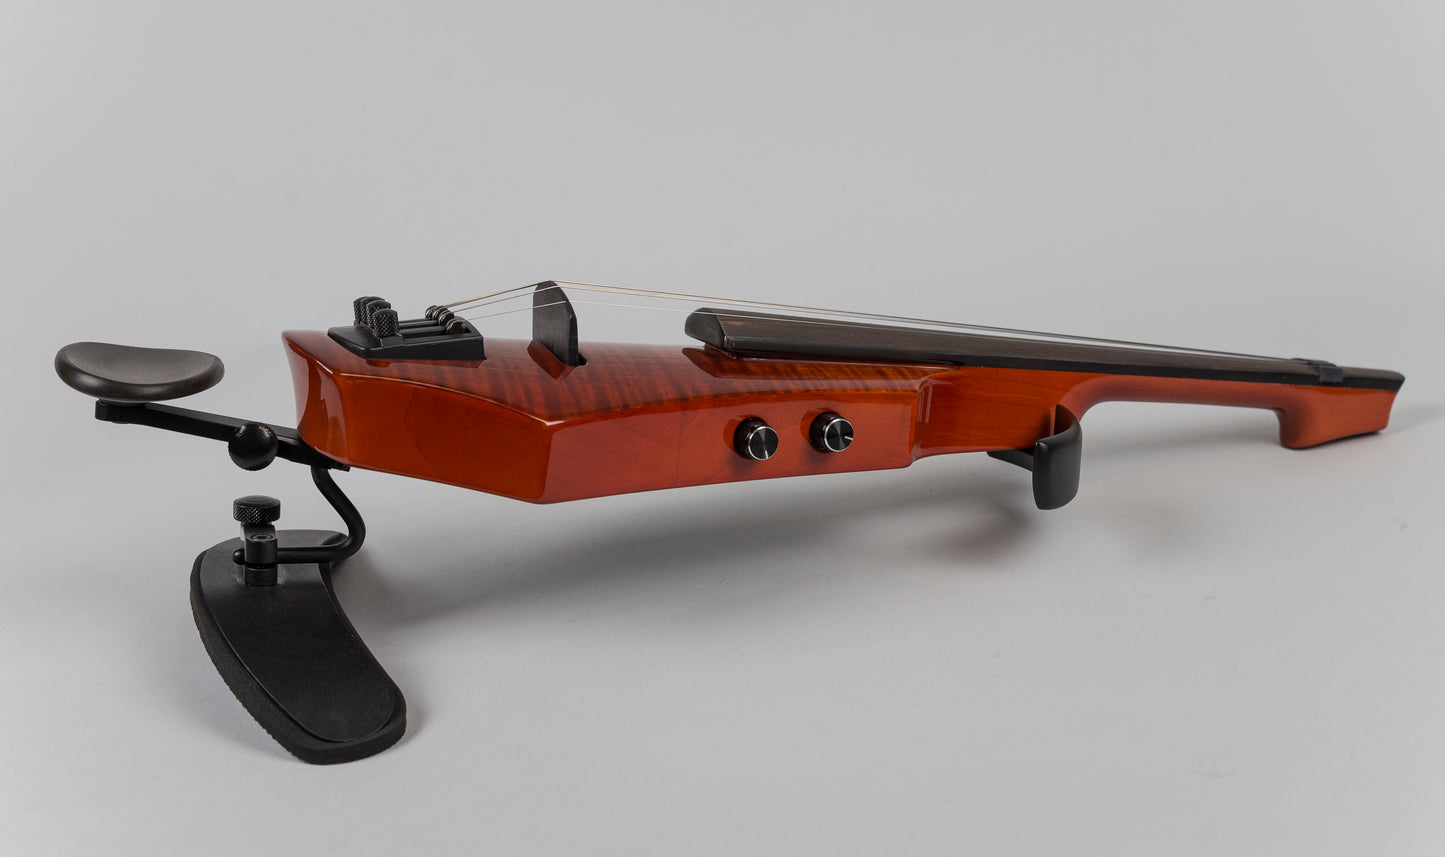 NS Design WAV4 4-String Electric Violin, Amberburst